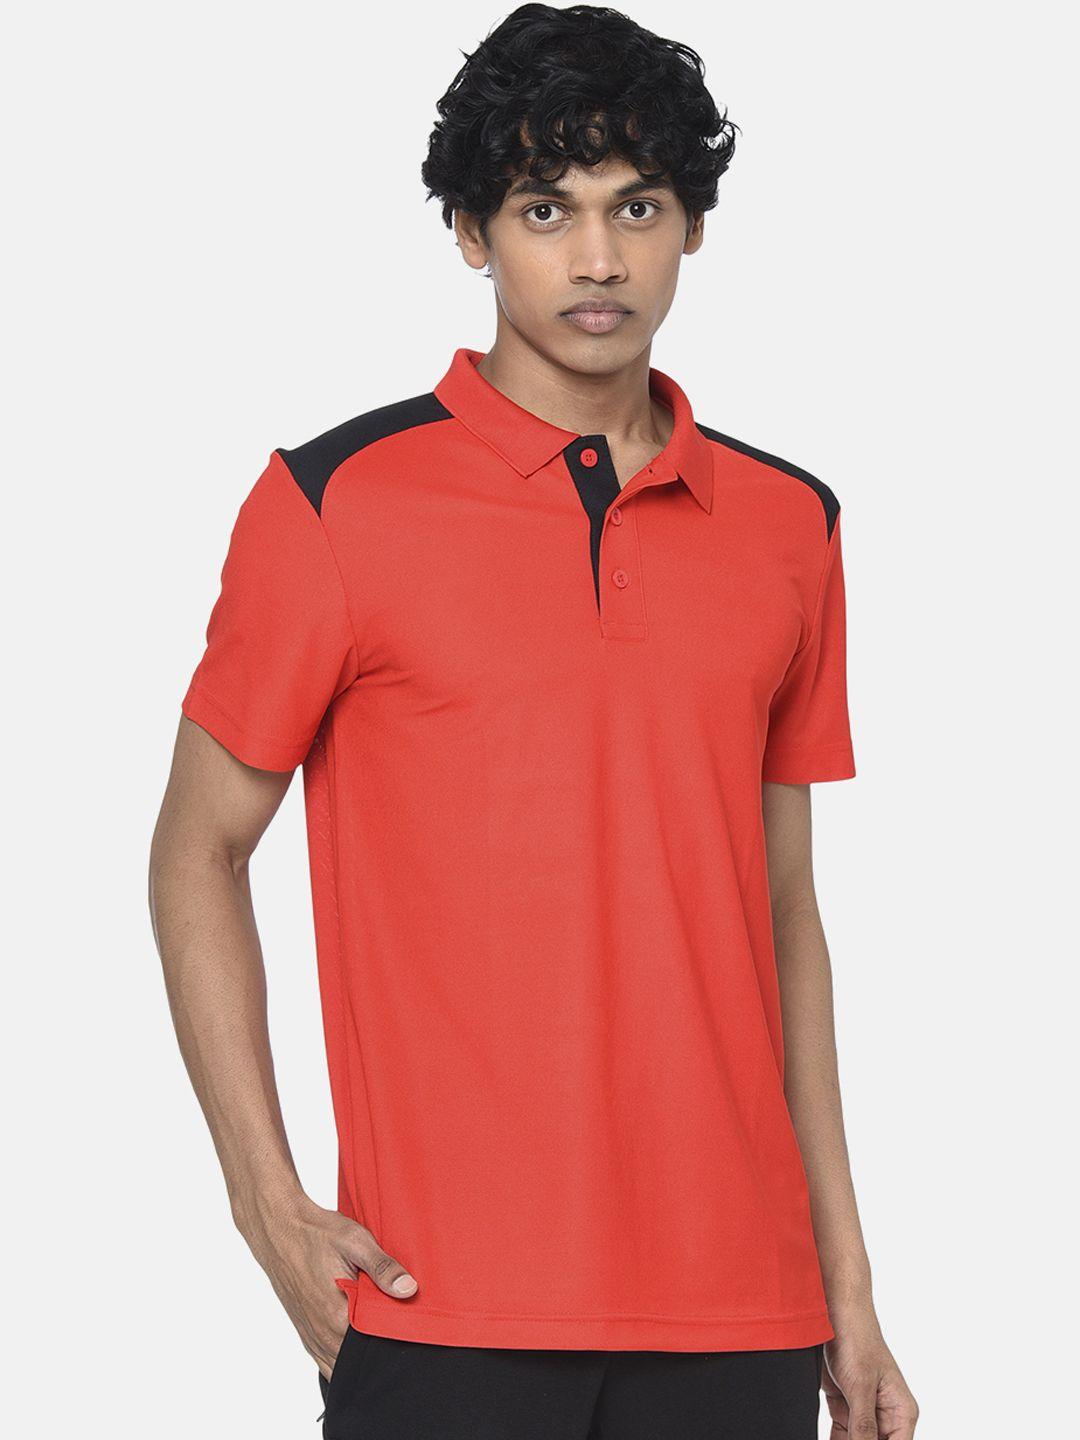 puma-men-red-colourblocked-train-polo-t-shirt